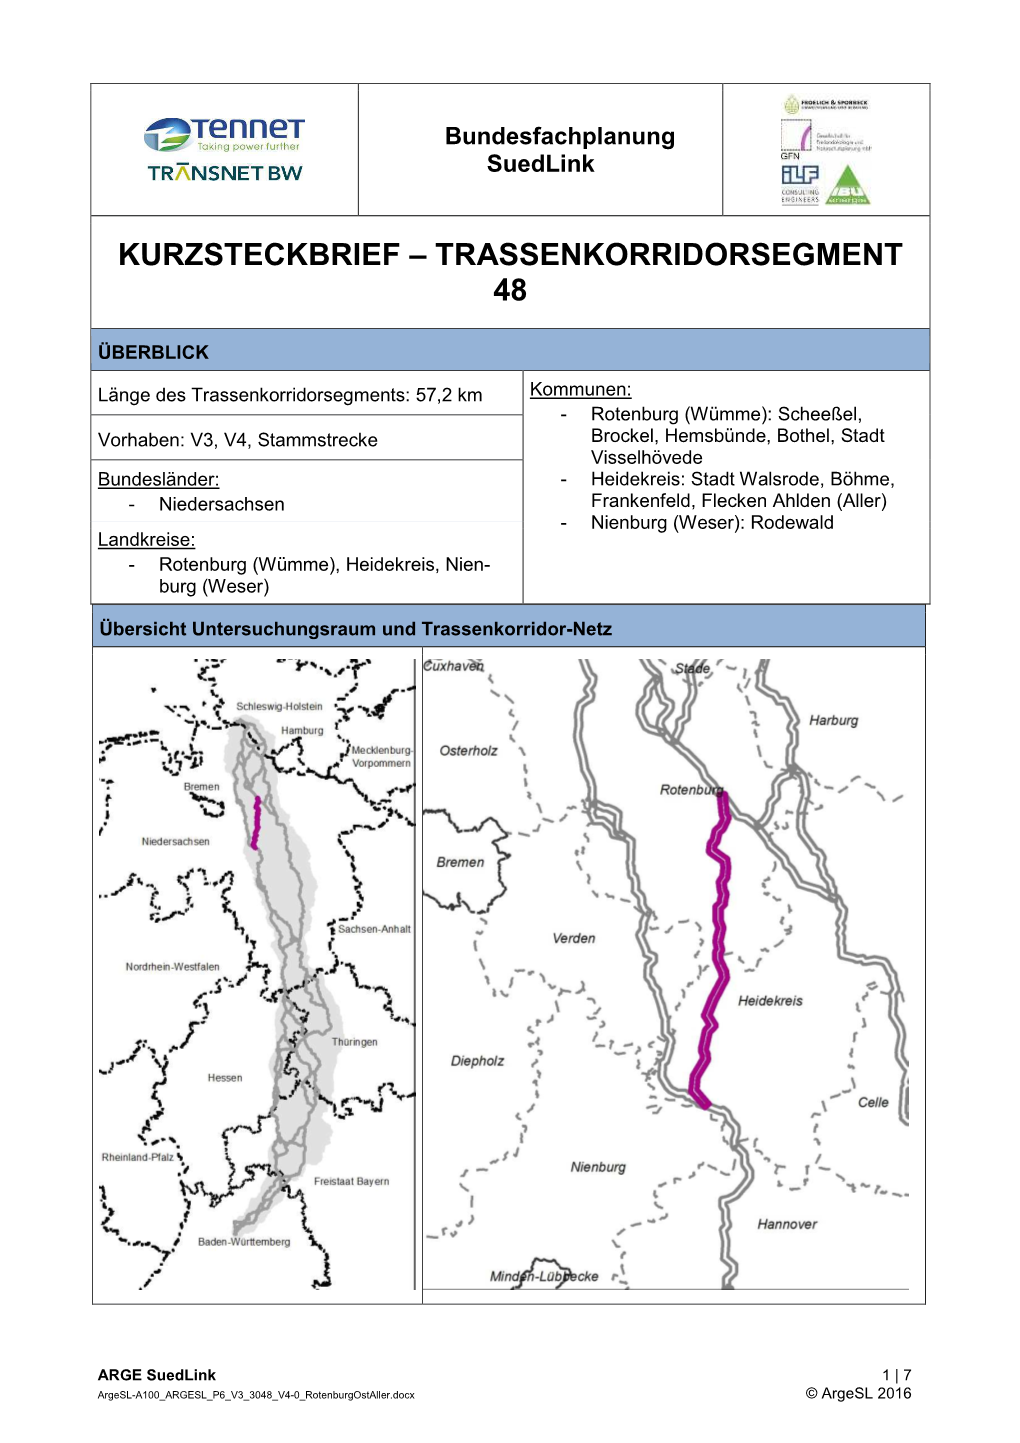 Kurzsteckbrief – Trassenkorridorsegment 48